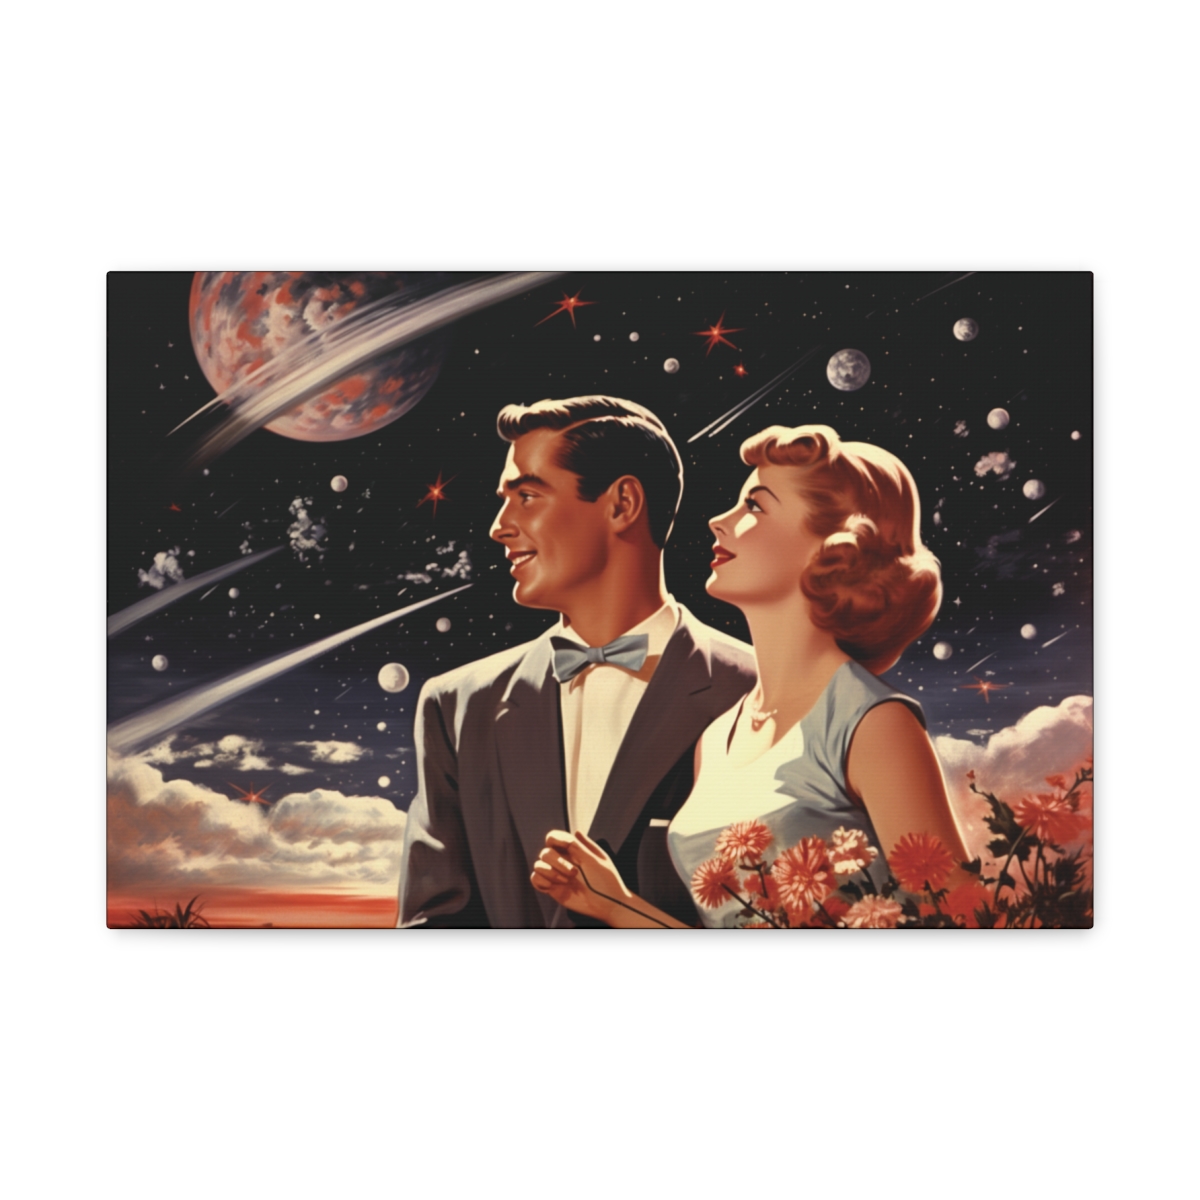 Retro 50s Style Galaxy Art Canvas Print: Family Time